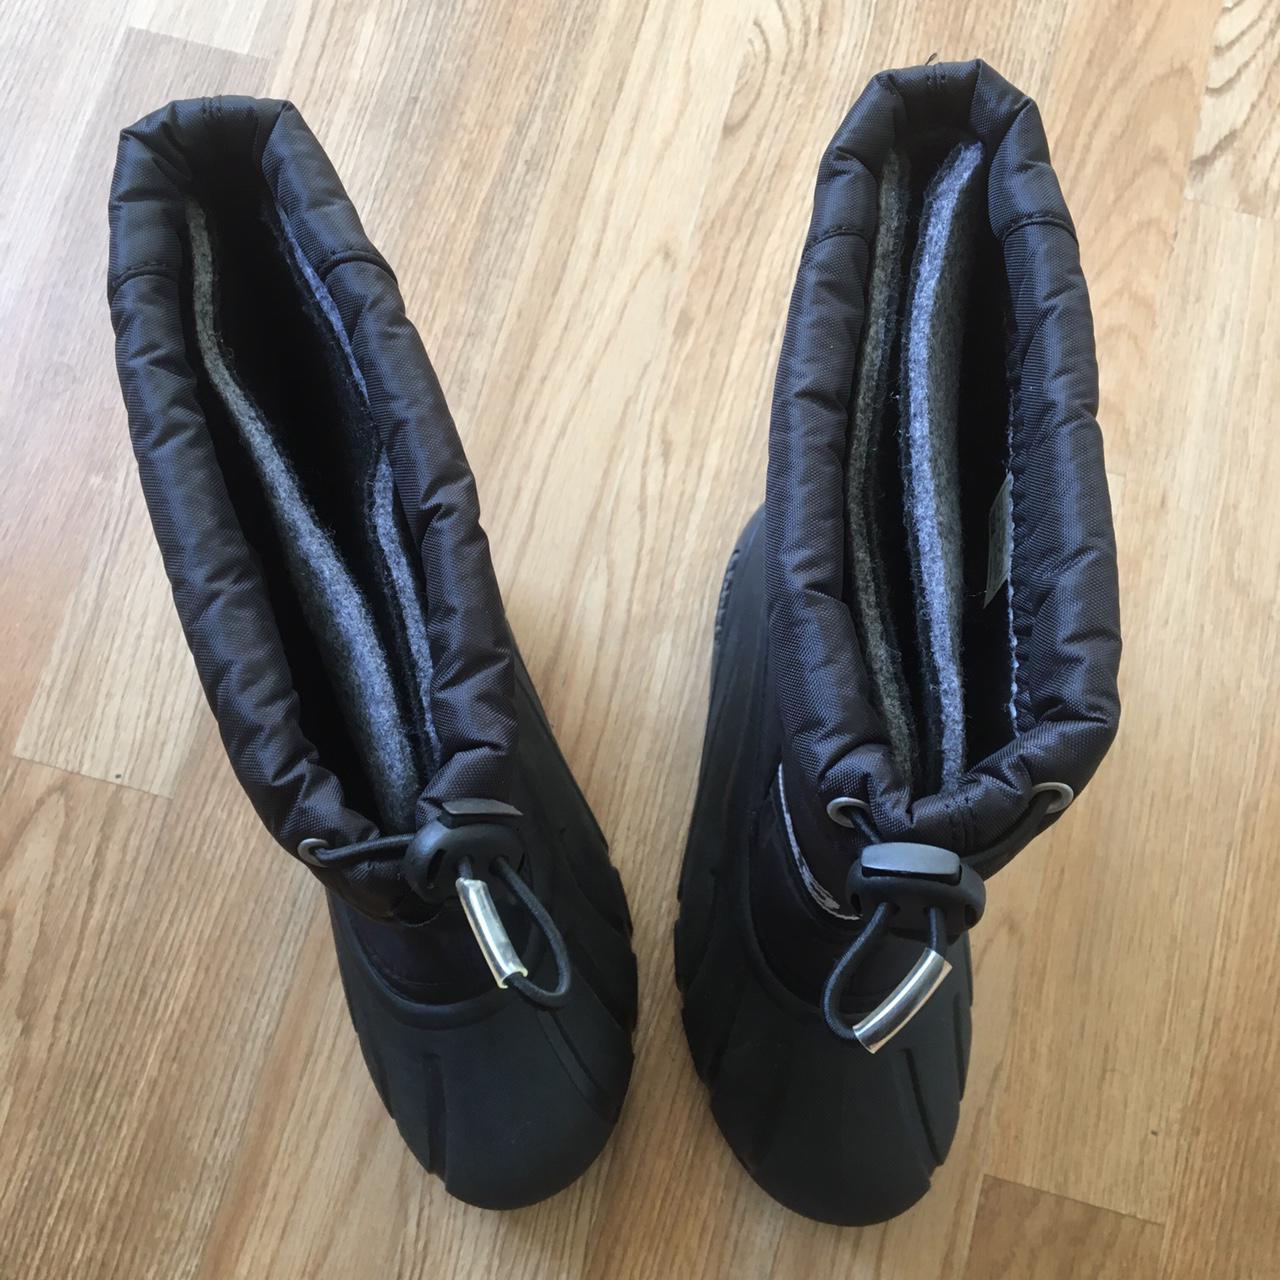 Sorel Kids Cub Winter Boots in Black. Almost new,... - Depop